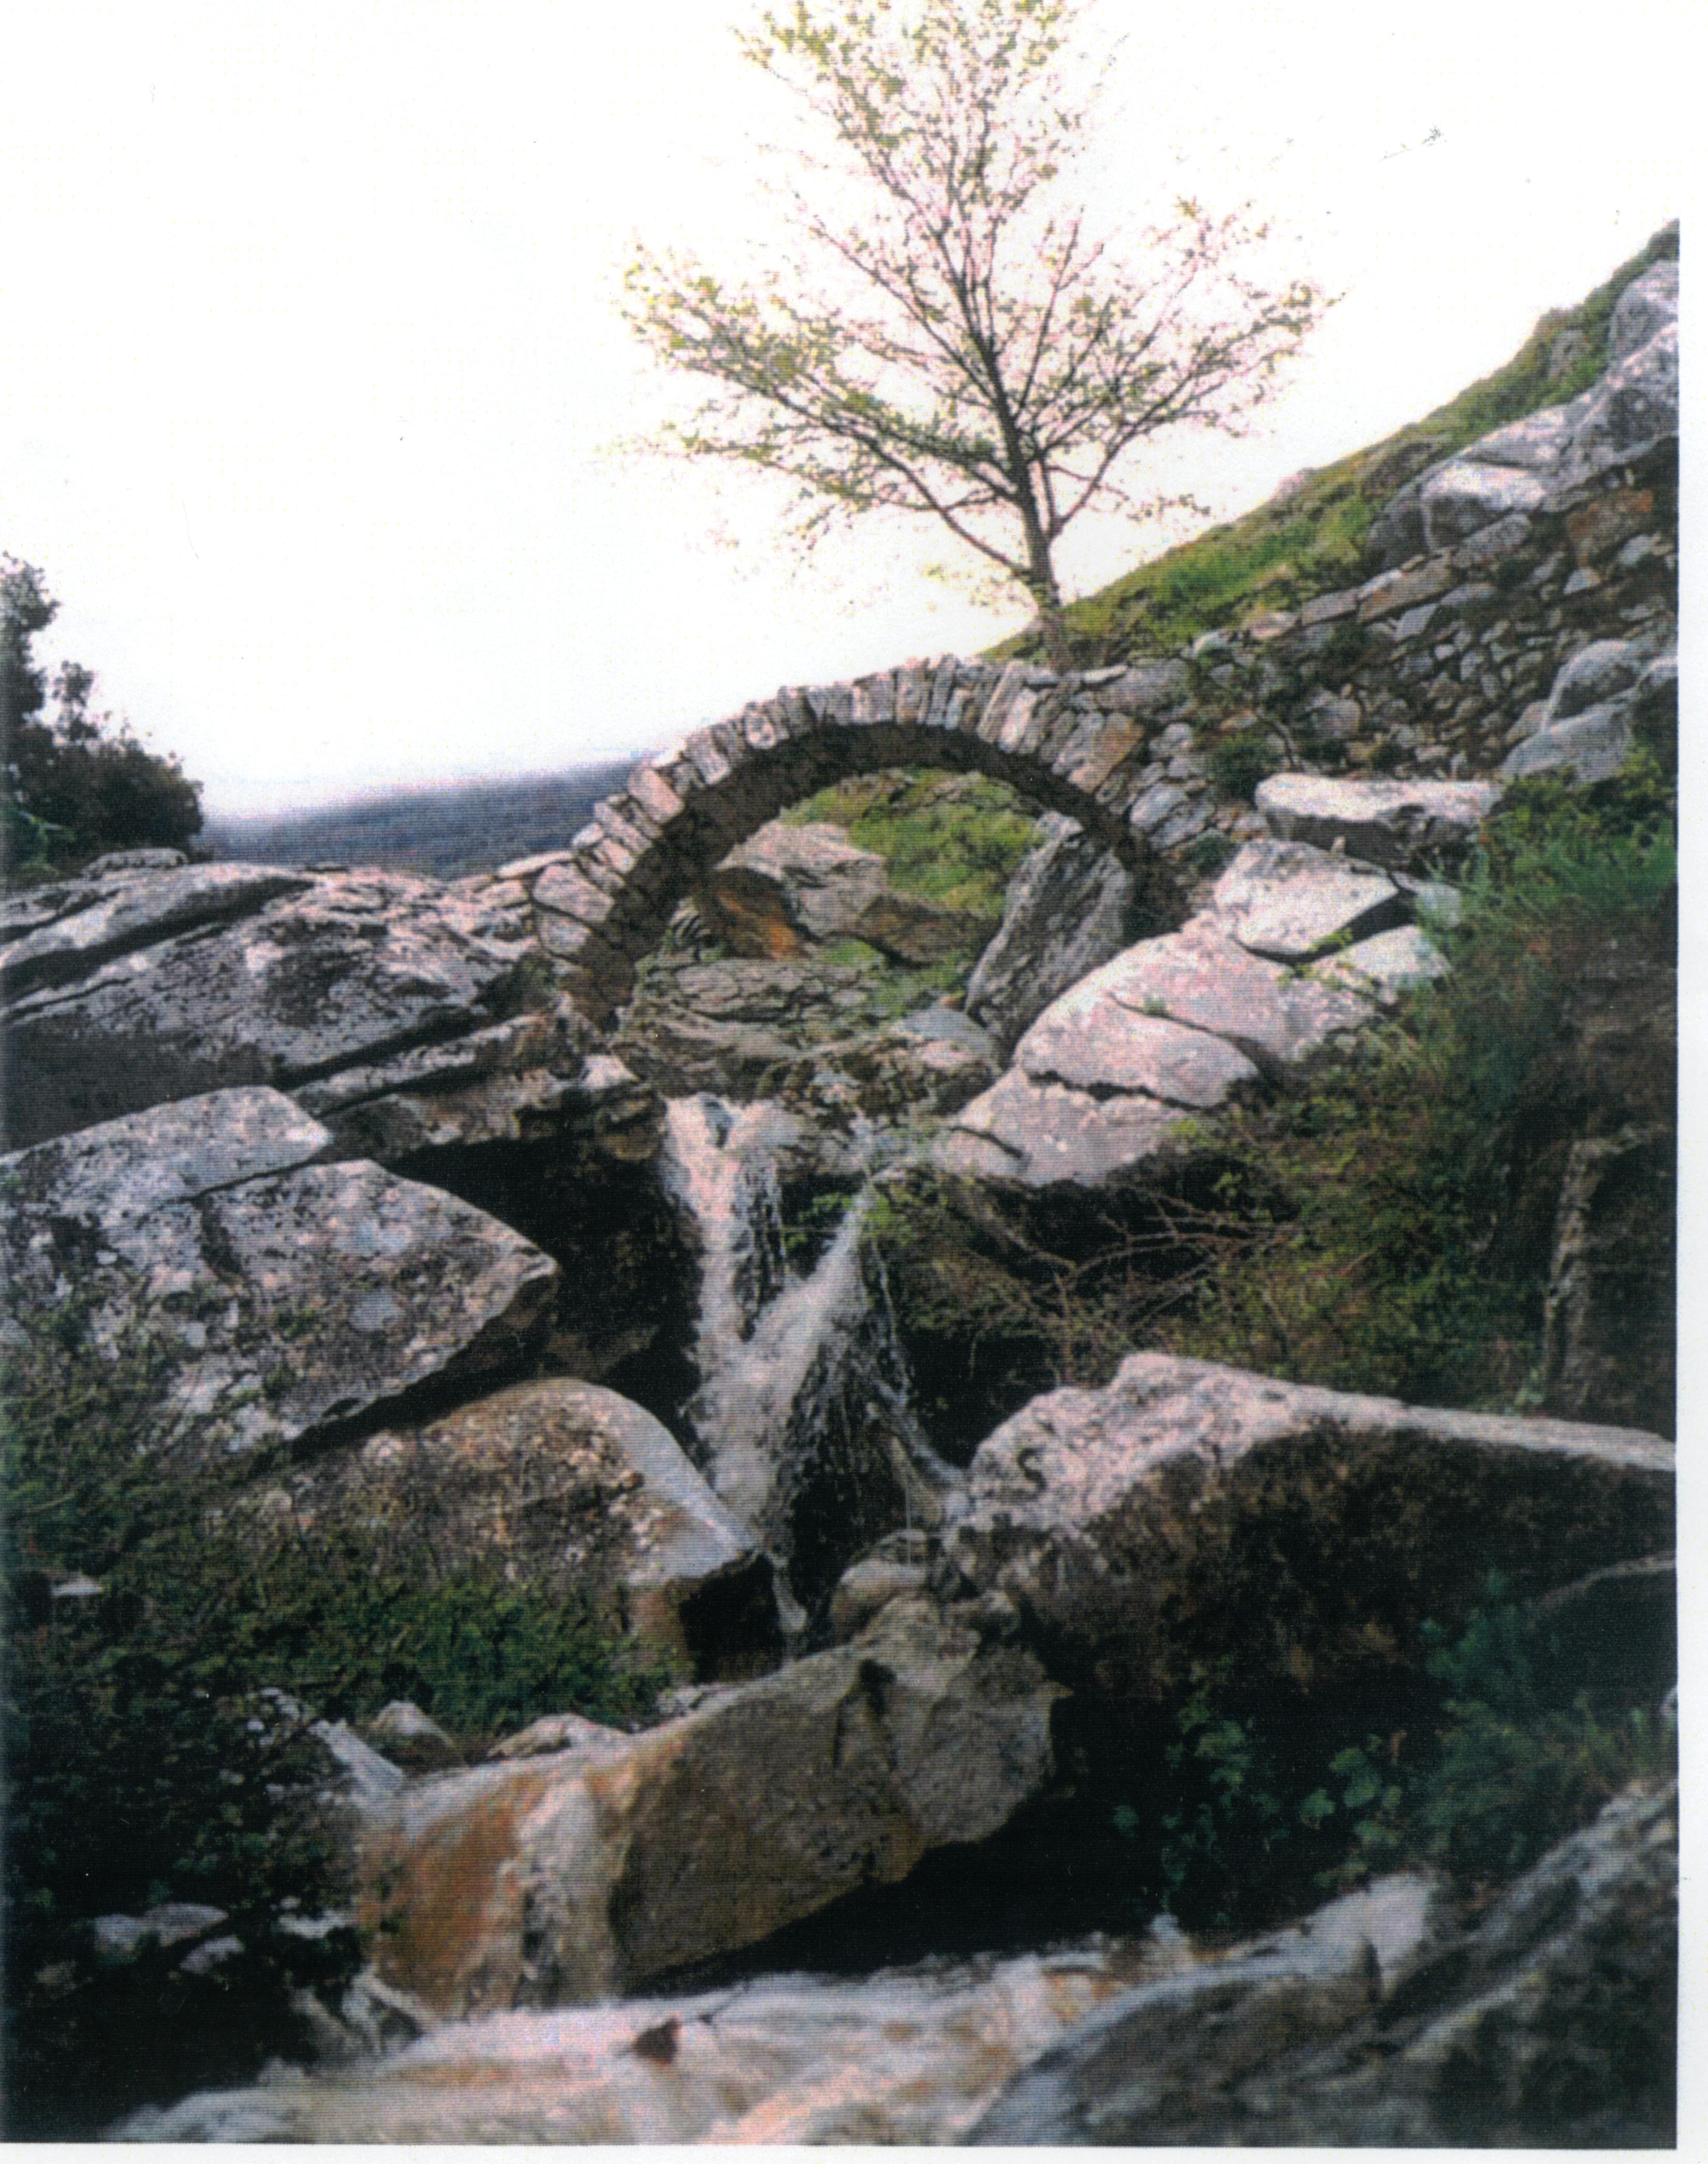 The stone bridges of Proti,